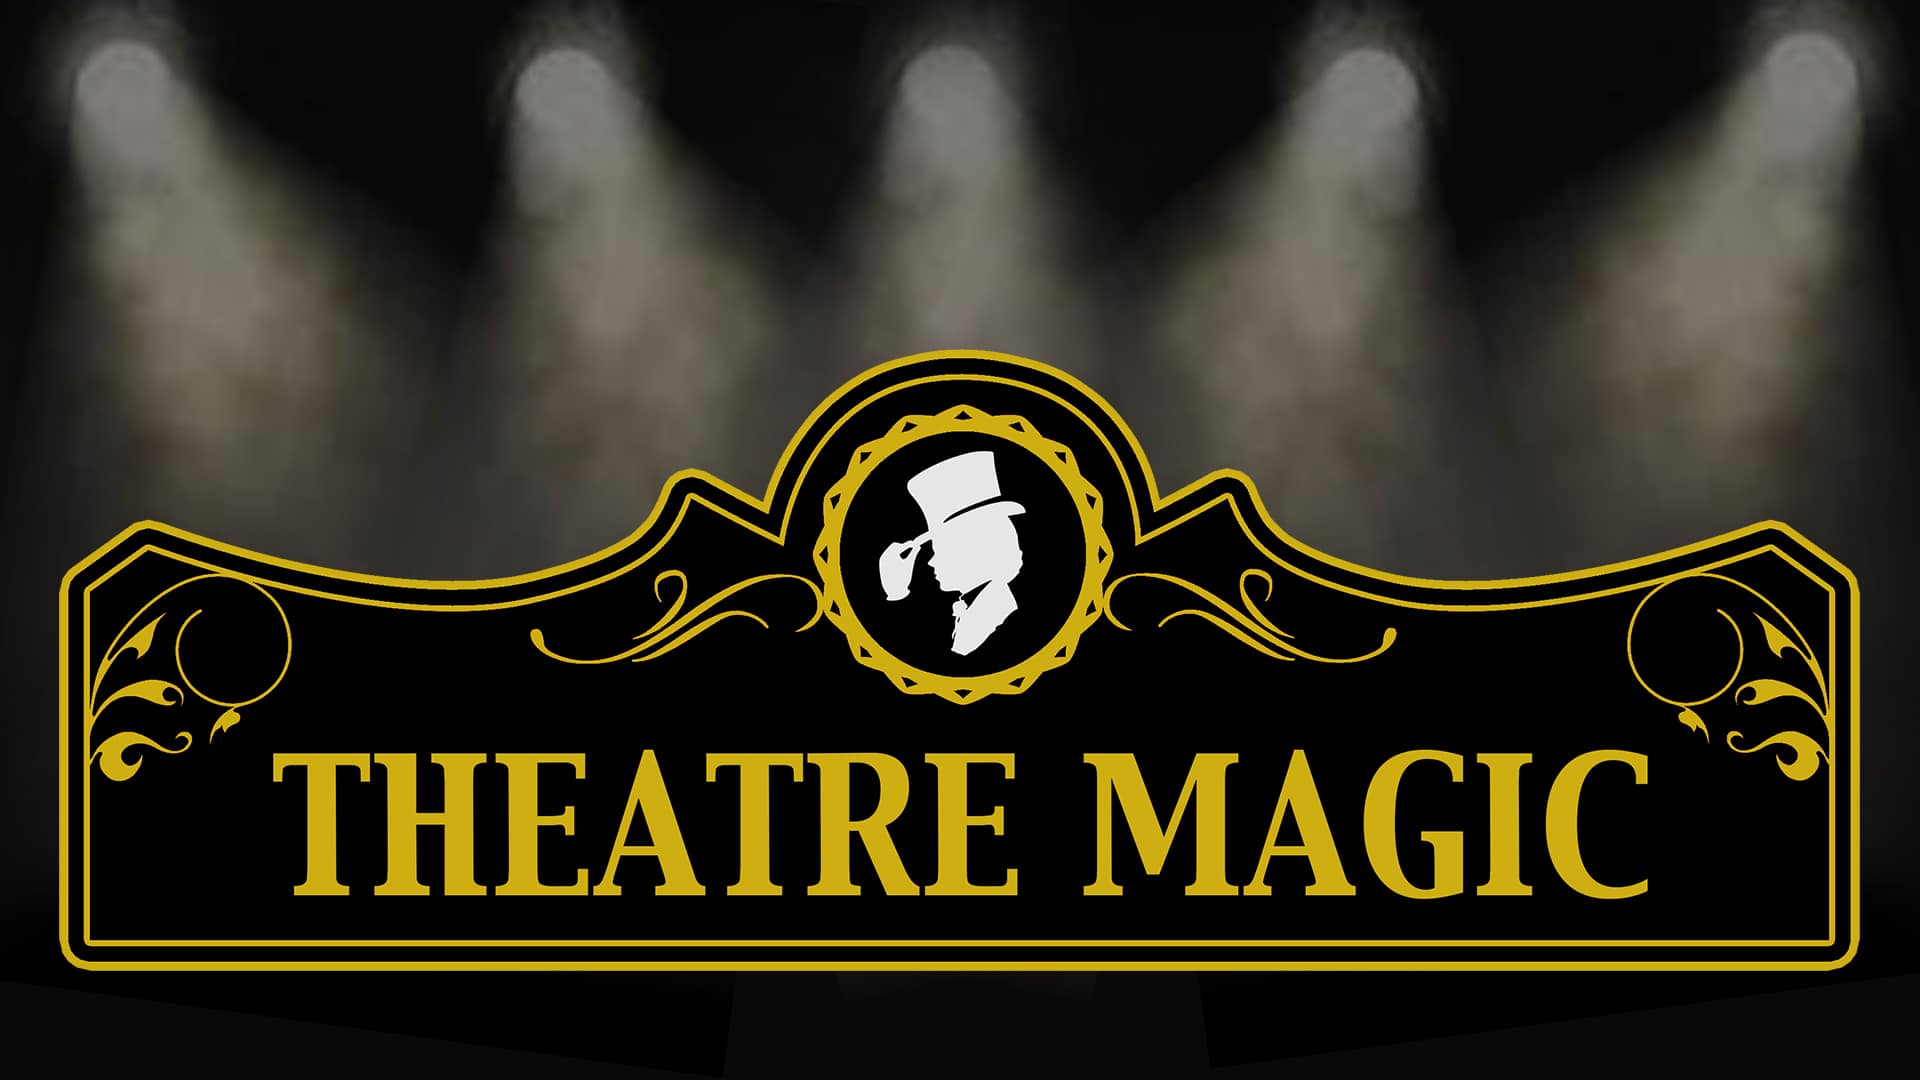 Learn Magic with Theatre Magic